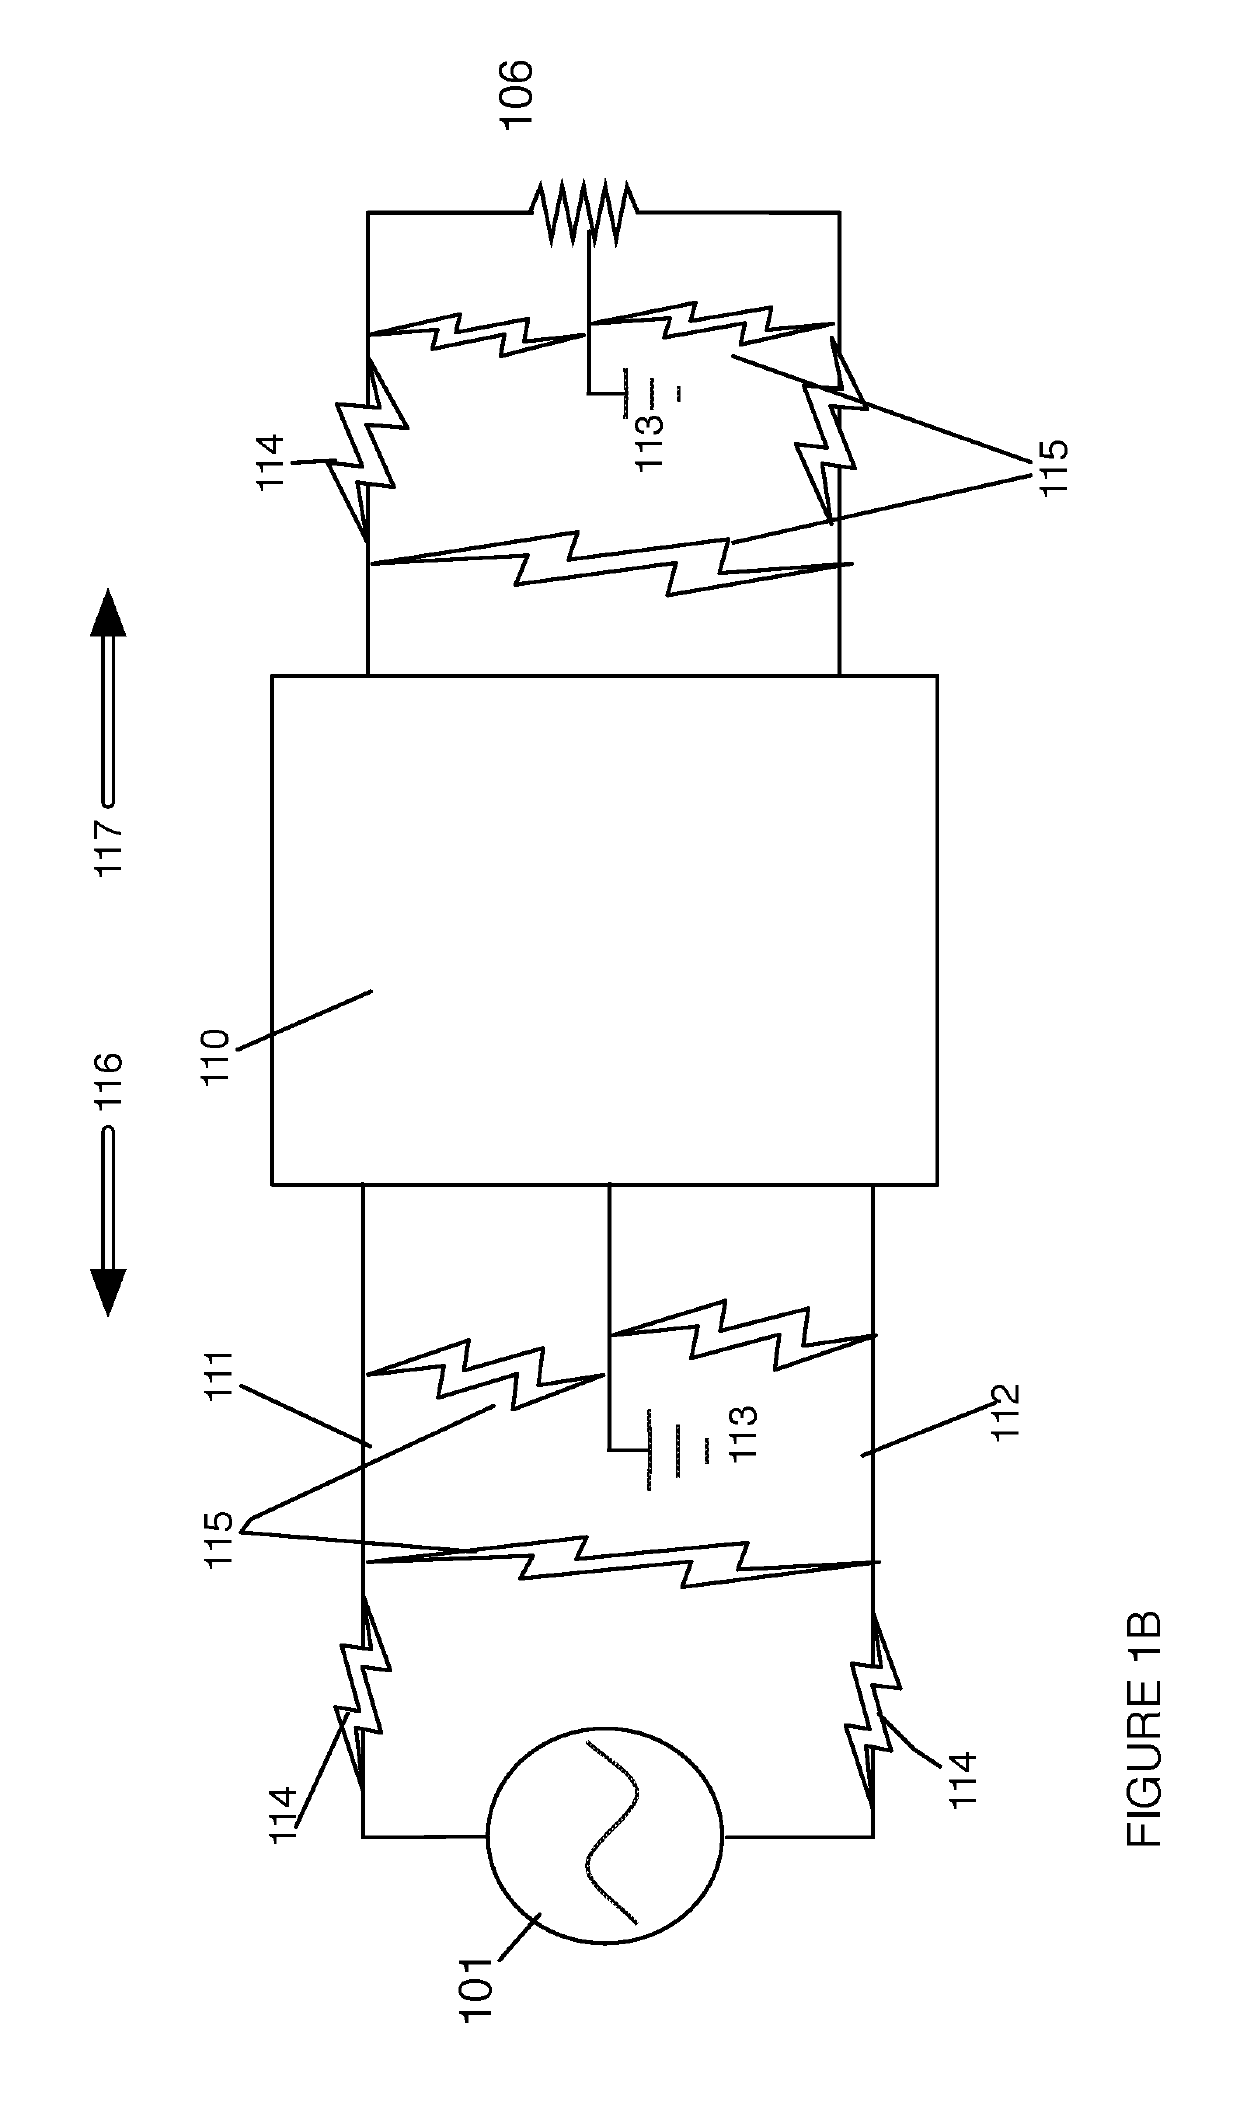 Solid-state line disturbance circuit interrupter